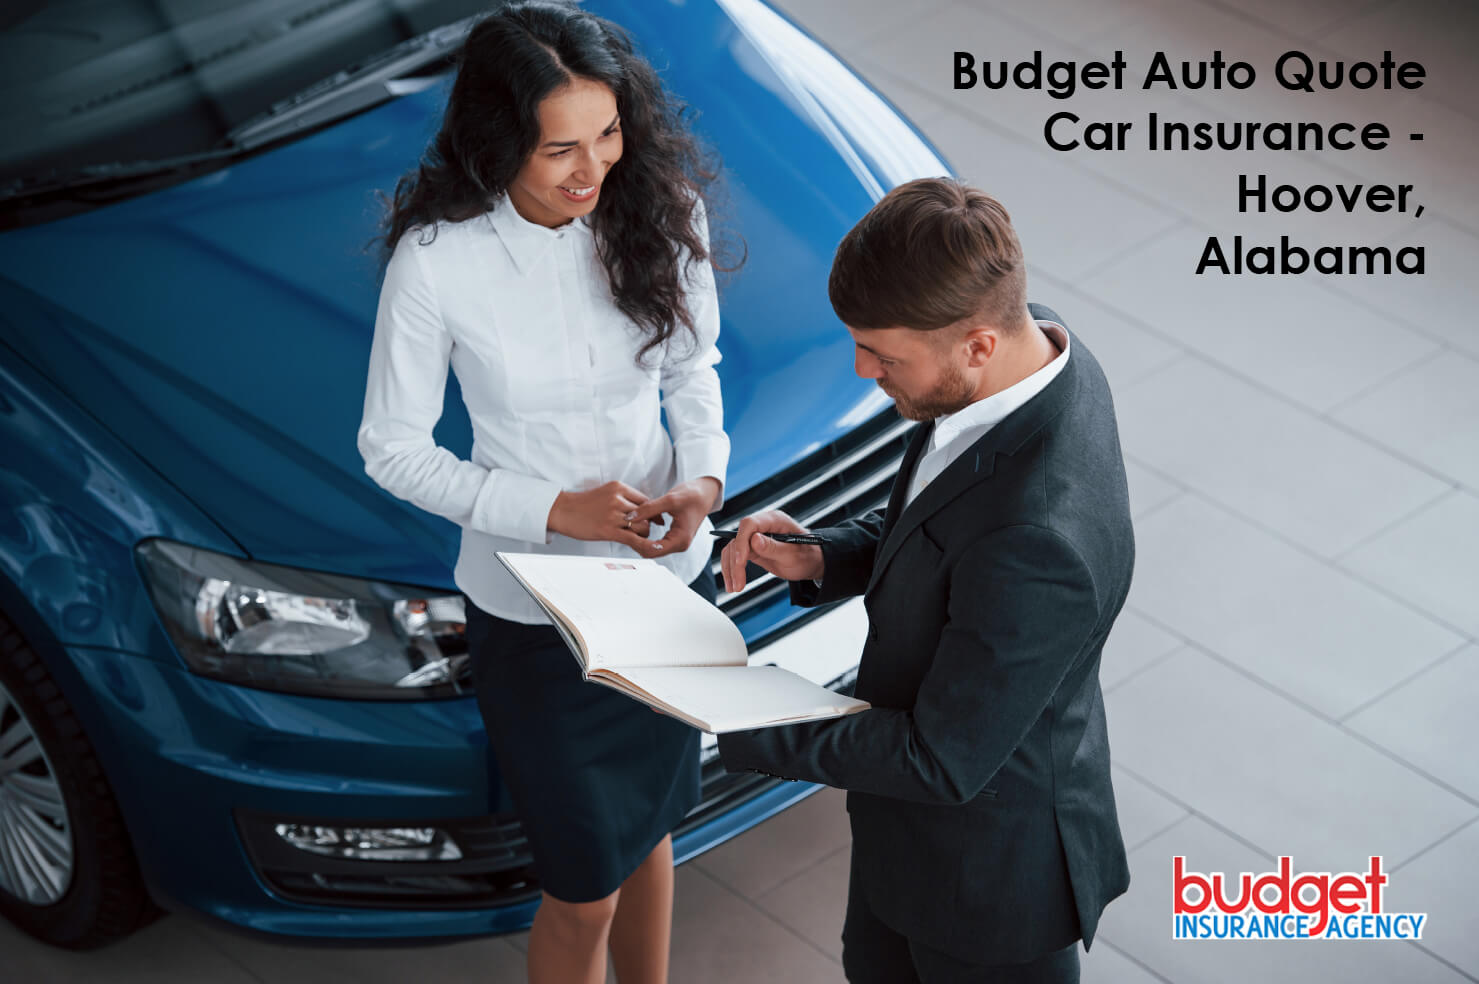 Budget Auto Quote Car Insurance - Hoover, Alabama